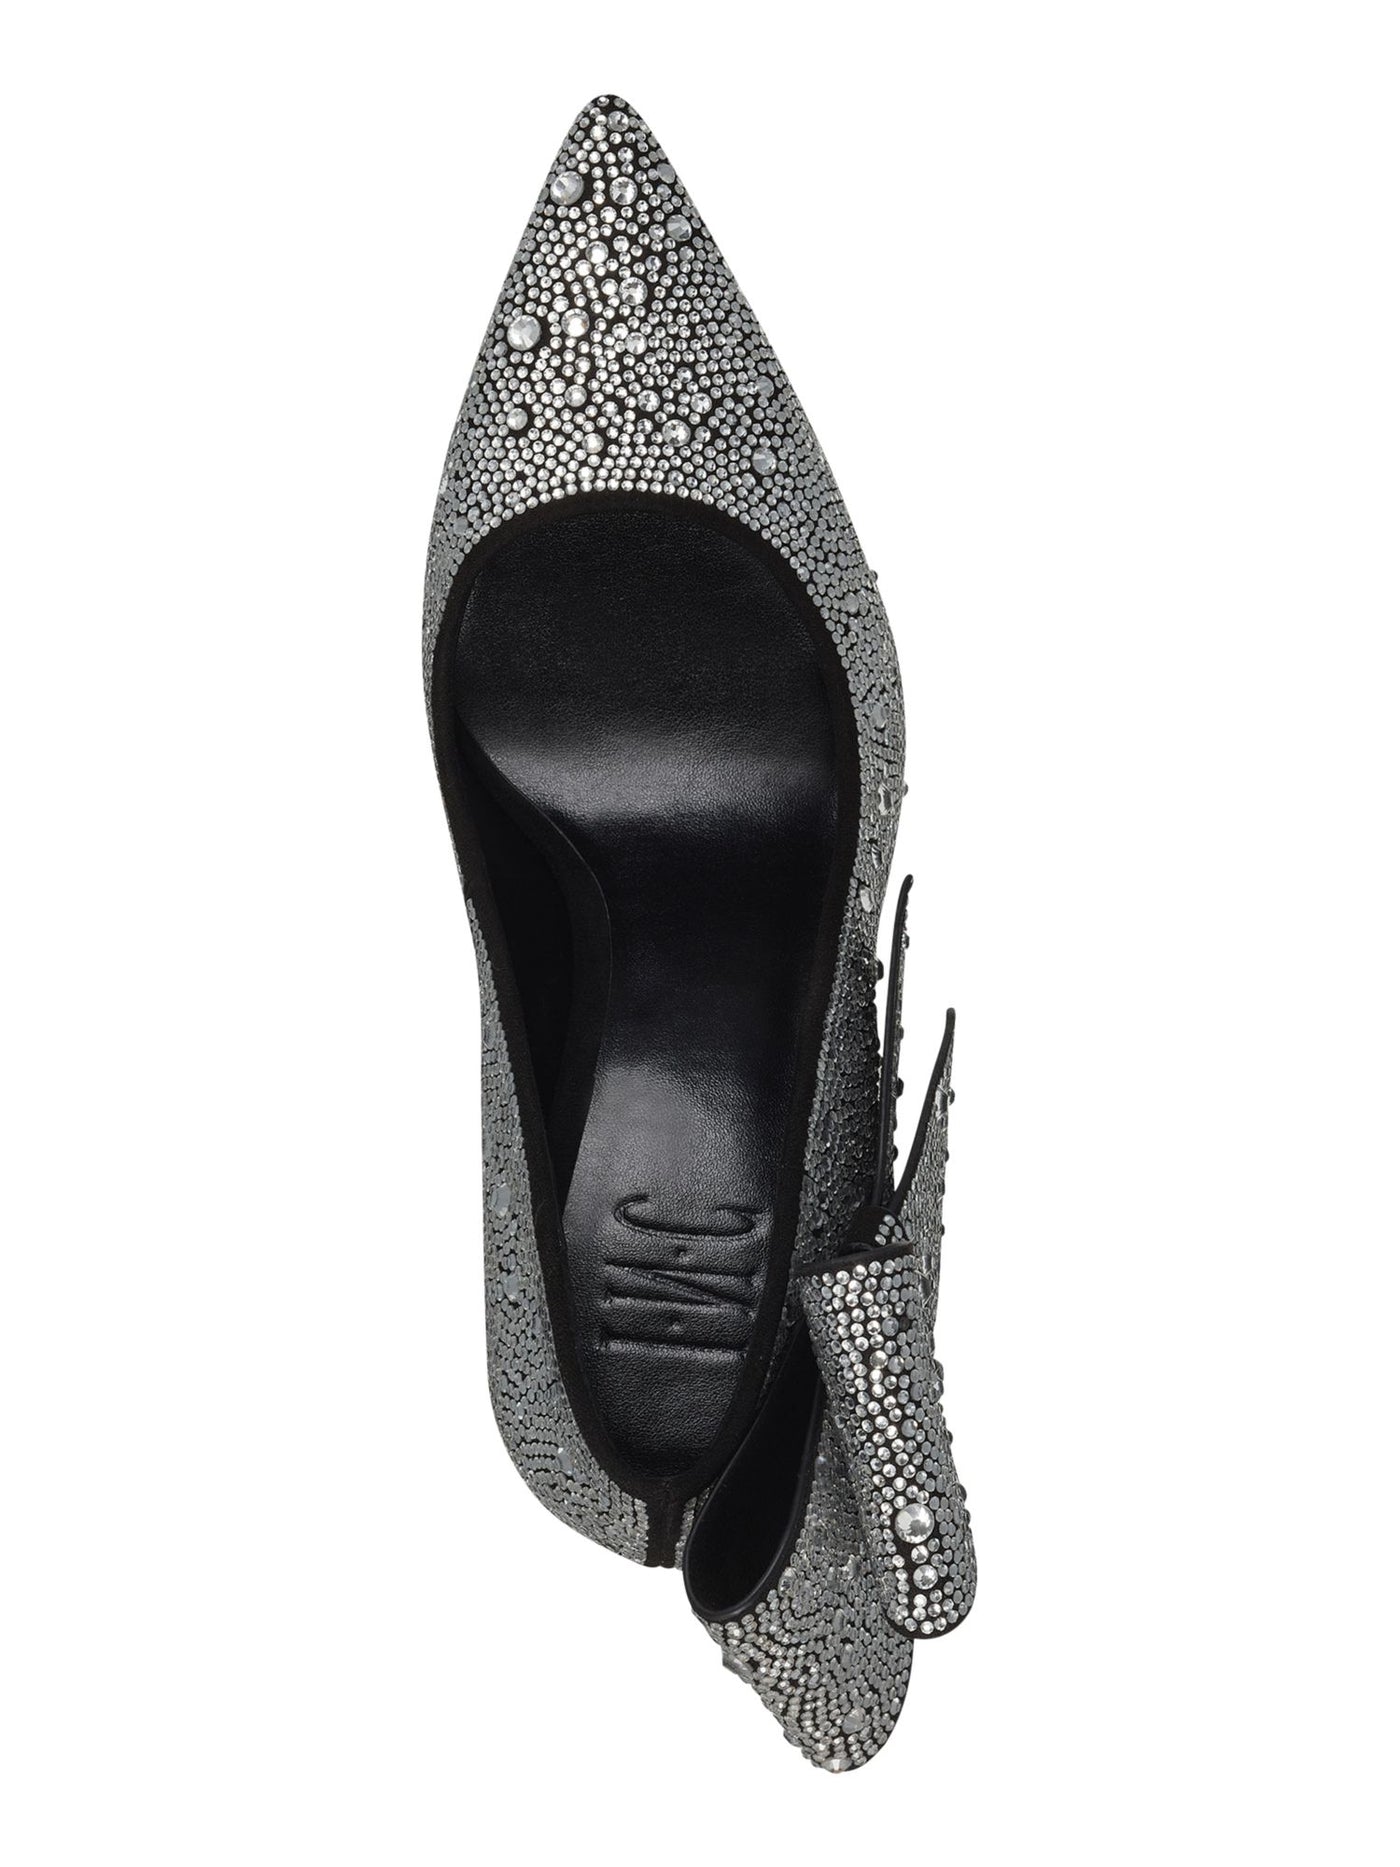 INC Womens Black Bow Detail Rhinestone Padded Silvee Pointed Toe Stiletto Slip On Dress Pumps Shoes 7 M